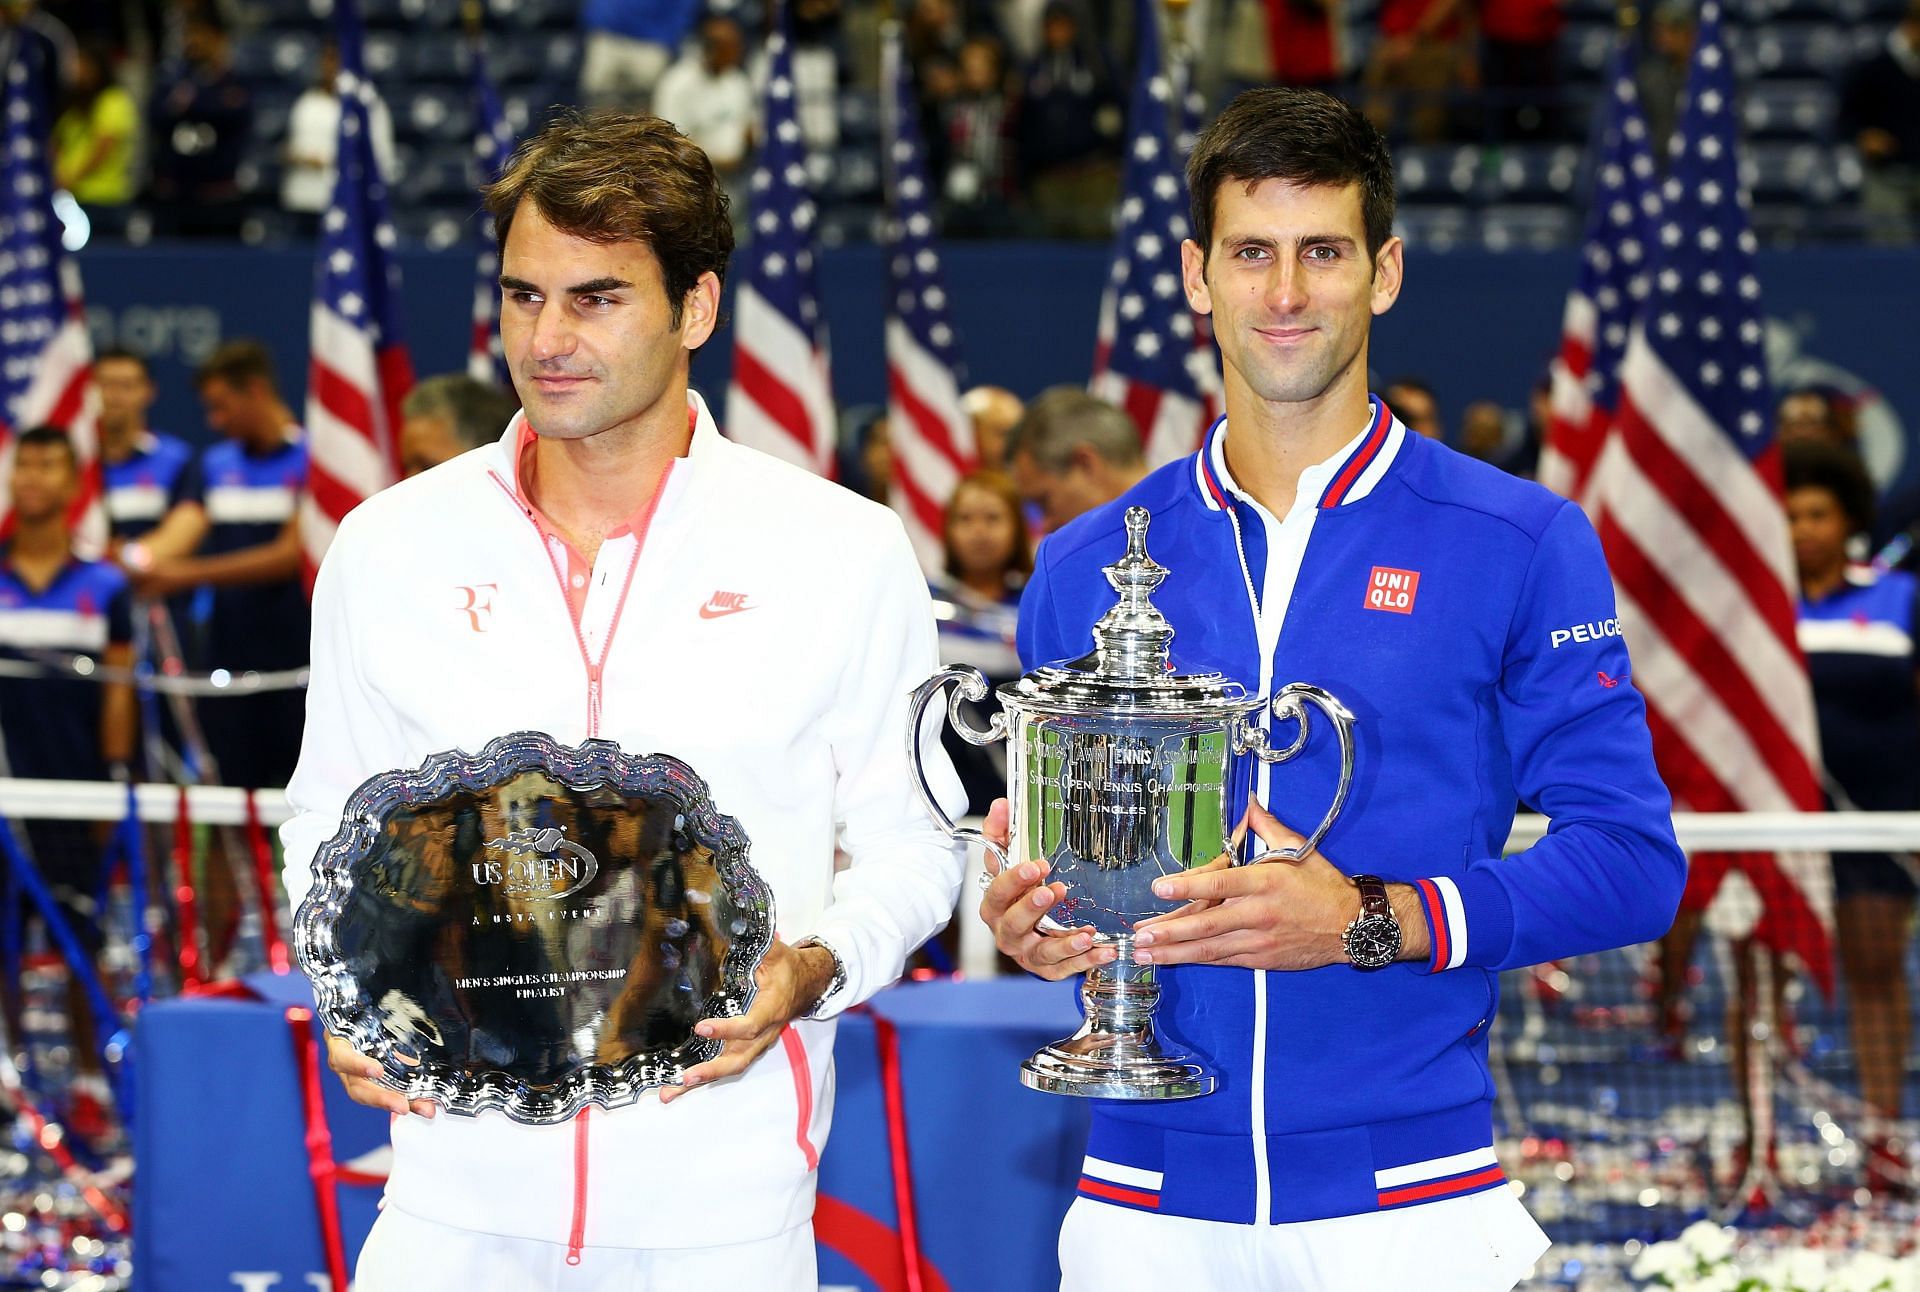 Roger Federer and Novak Djokovic at the 2015 U.S. Open award ceremony